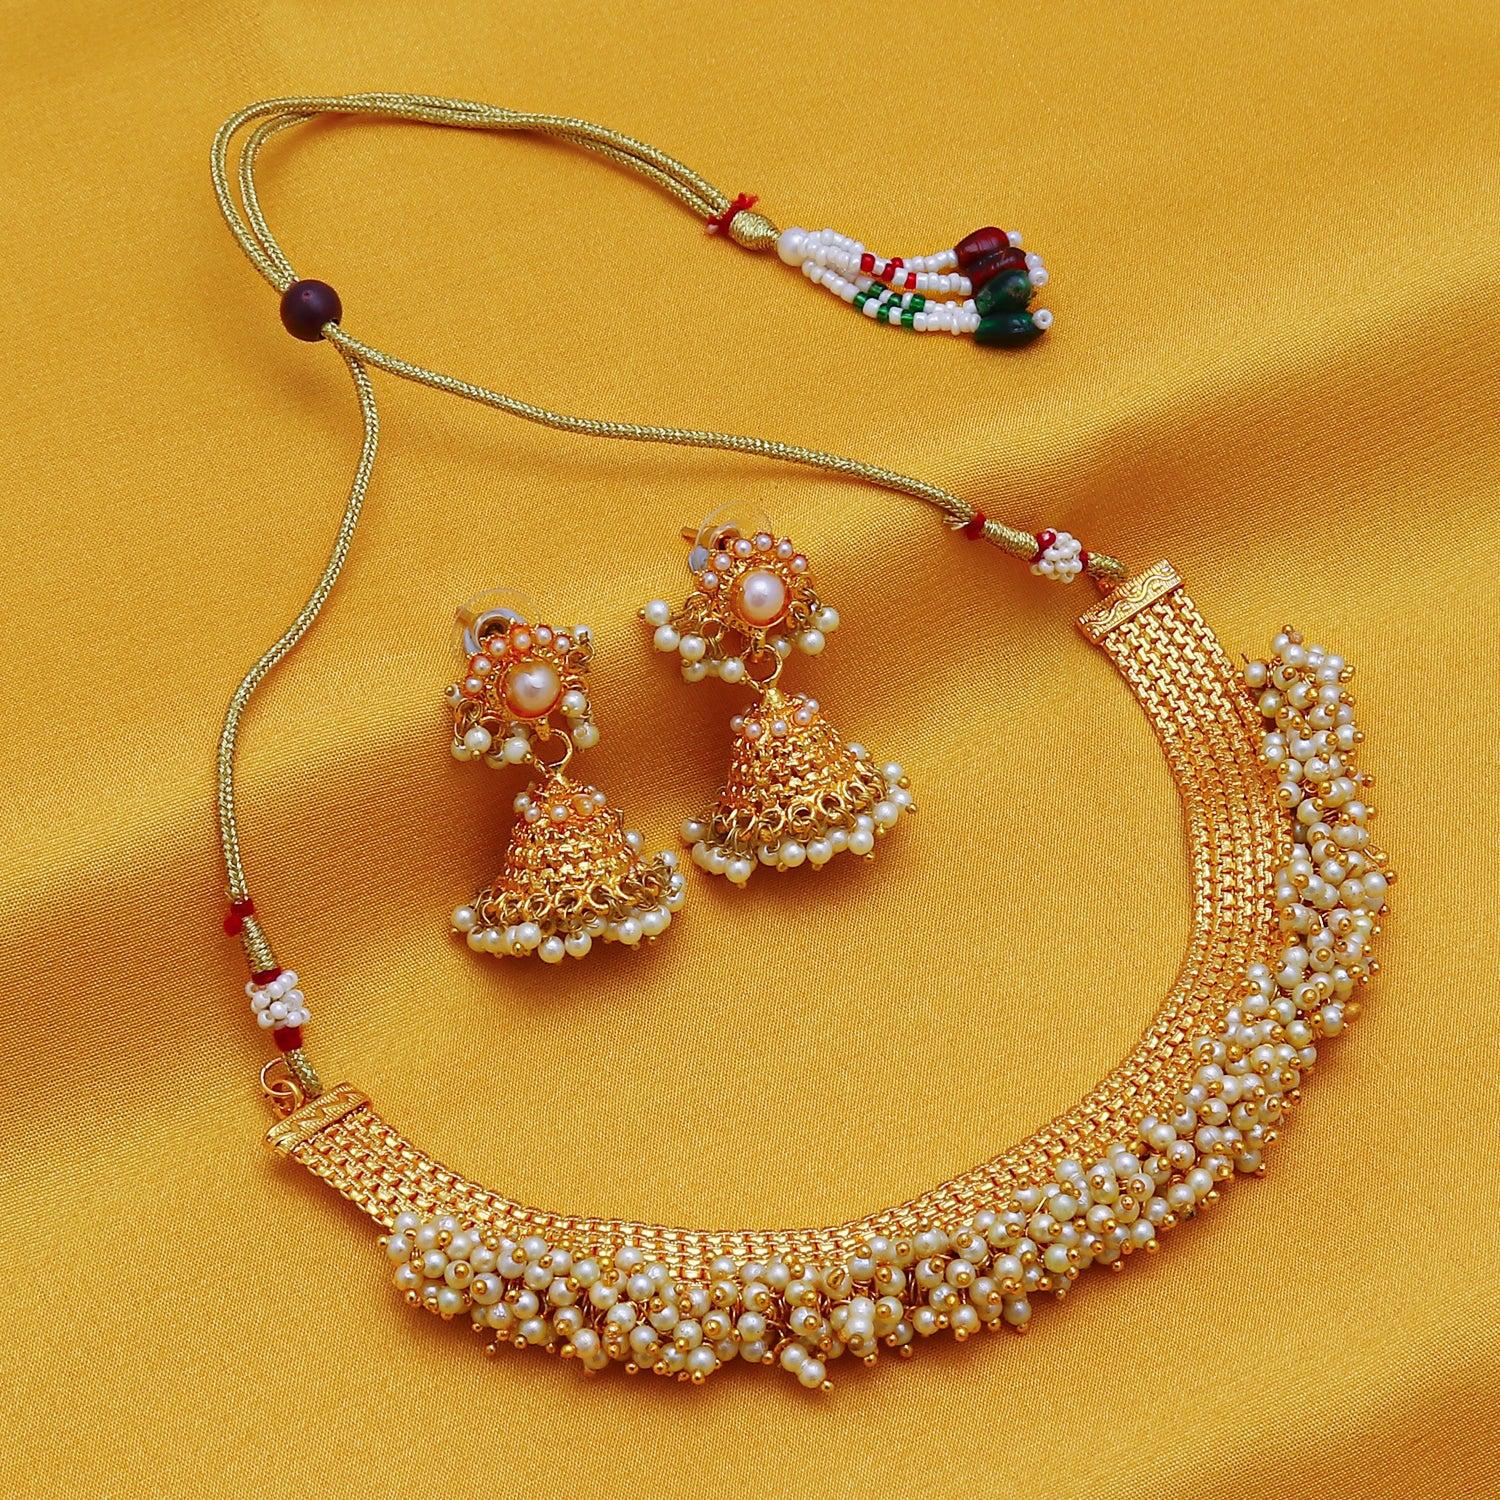 10 Best Artificial Jewelry Brands in India